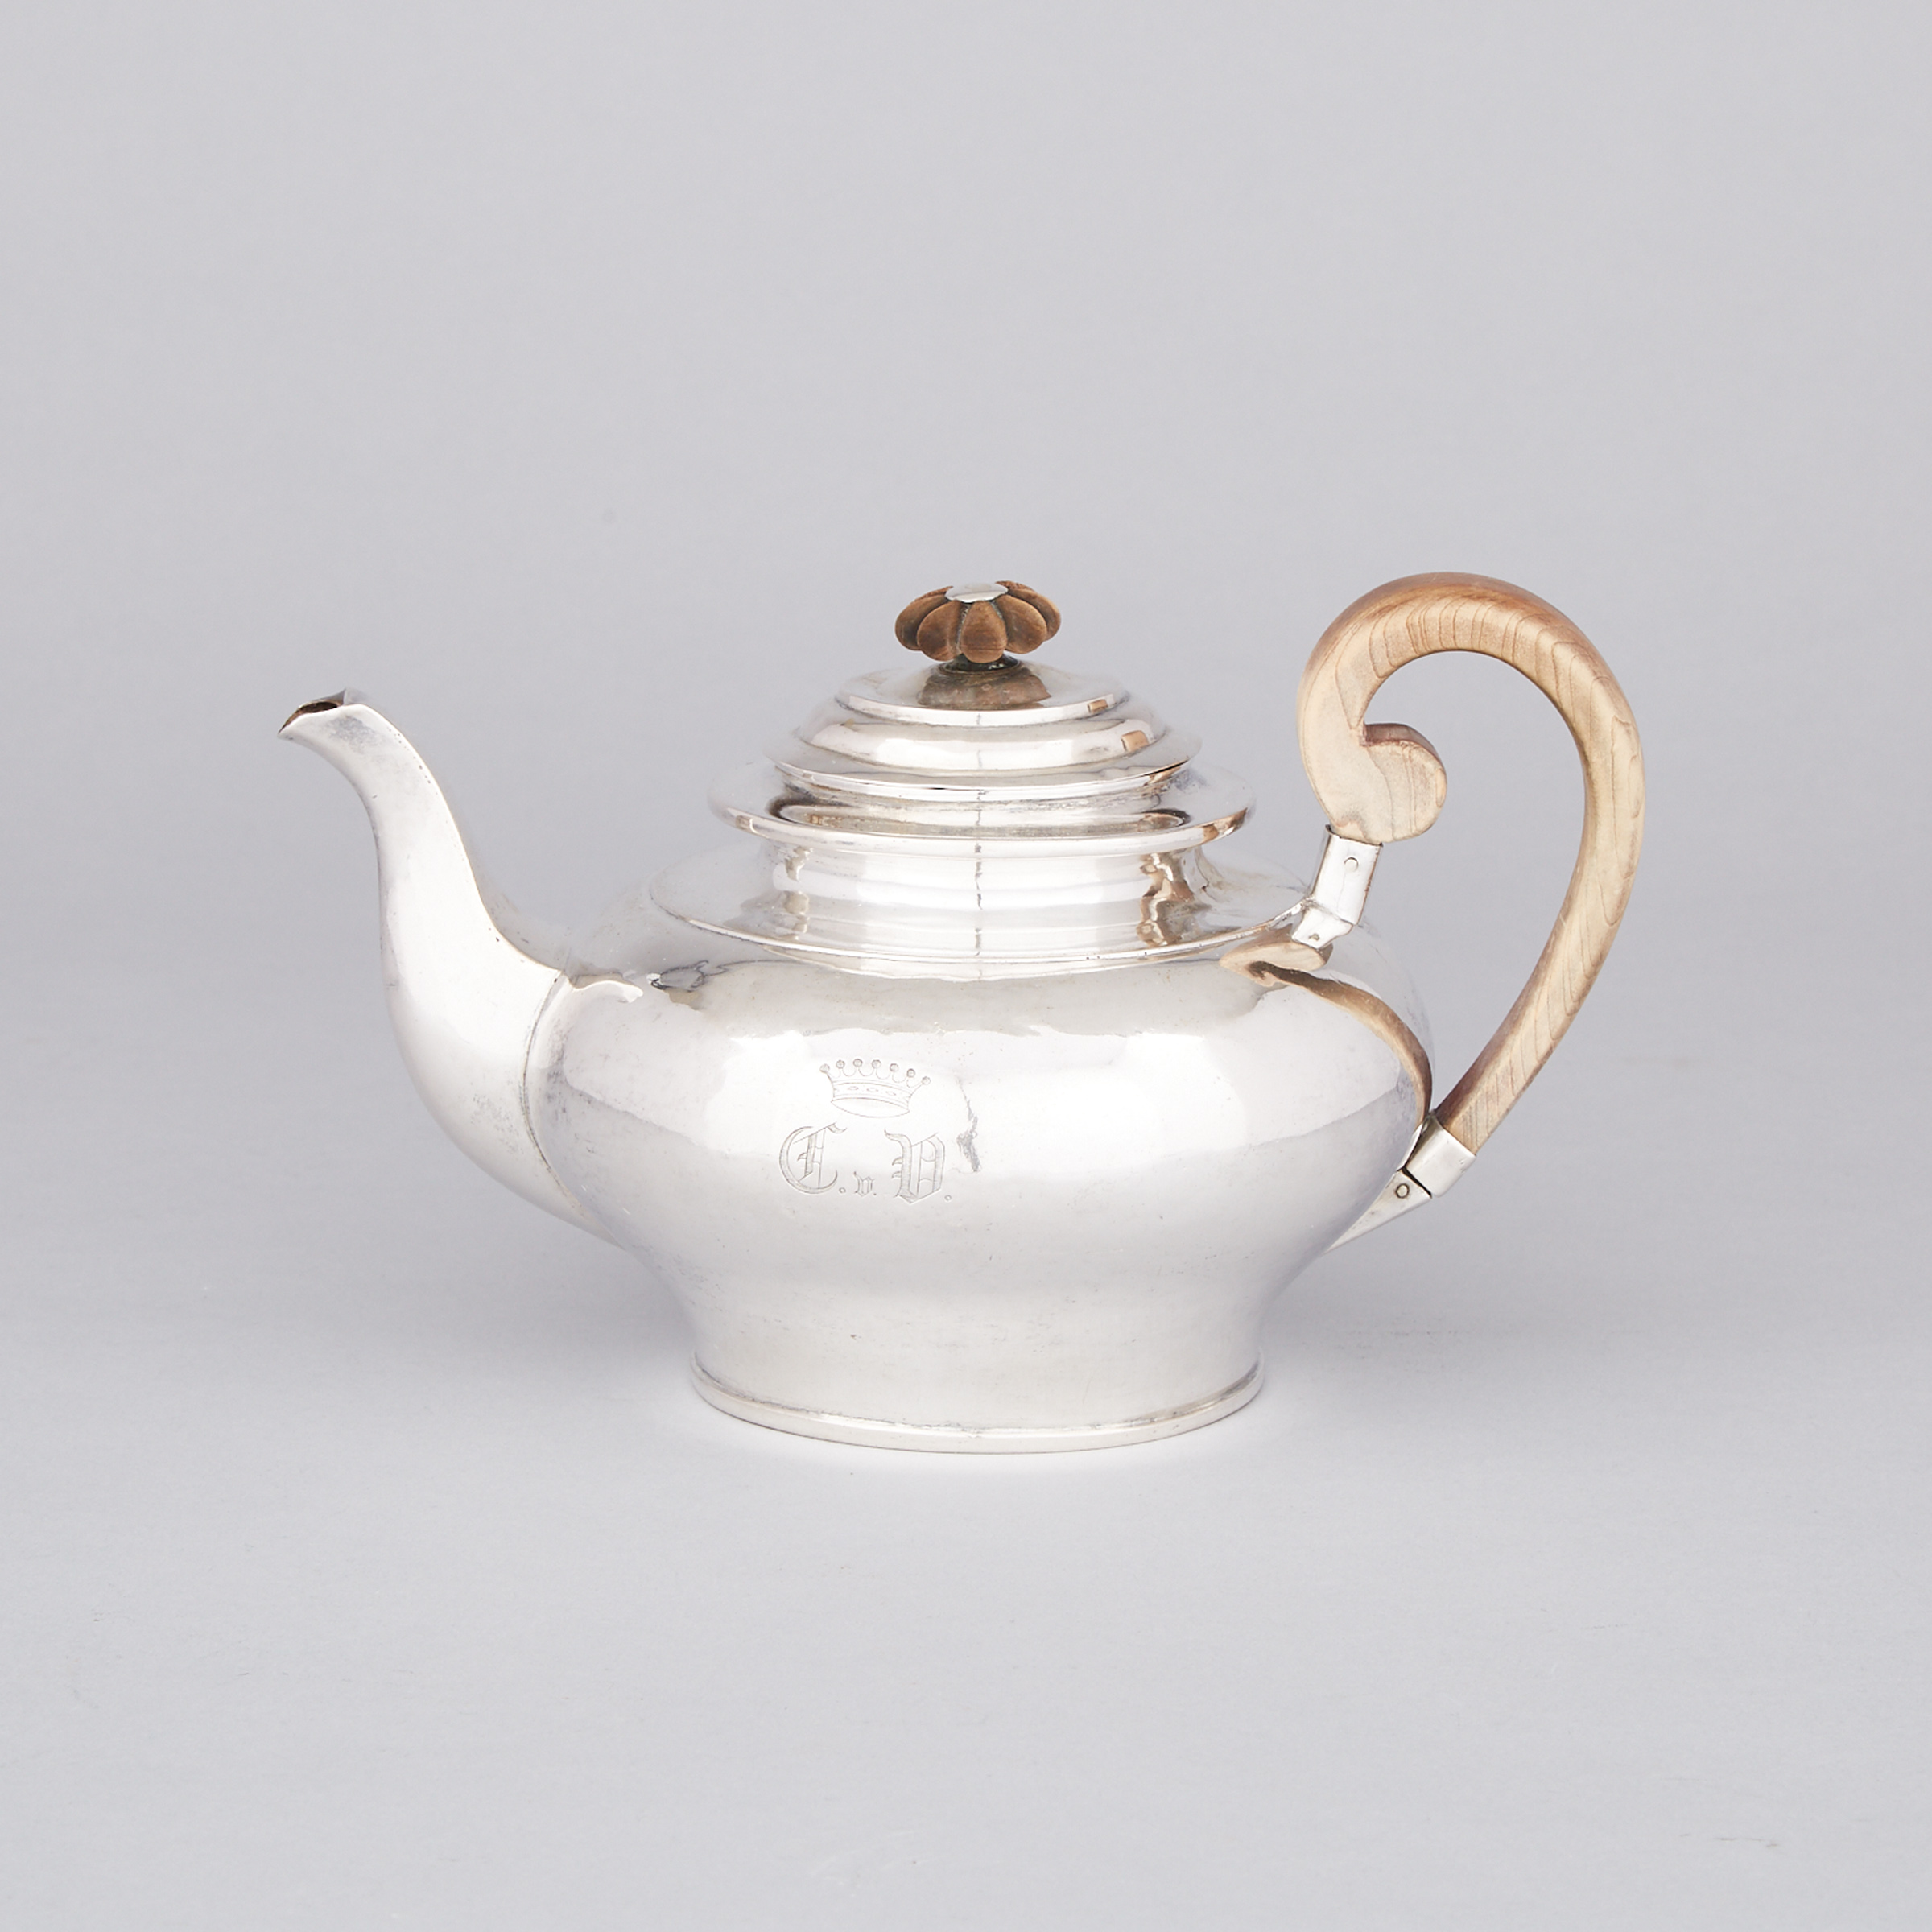 German Silver Teapot, Christian Wolfgang Kaupert, Kassel, mid-19th century